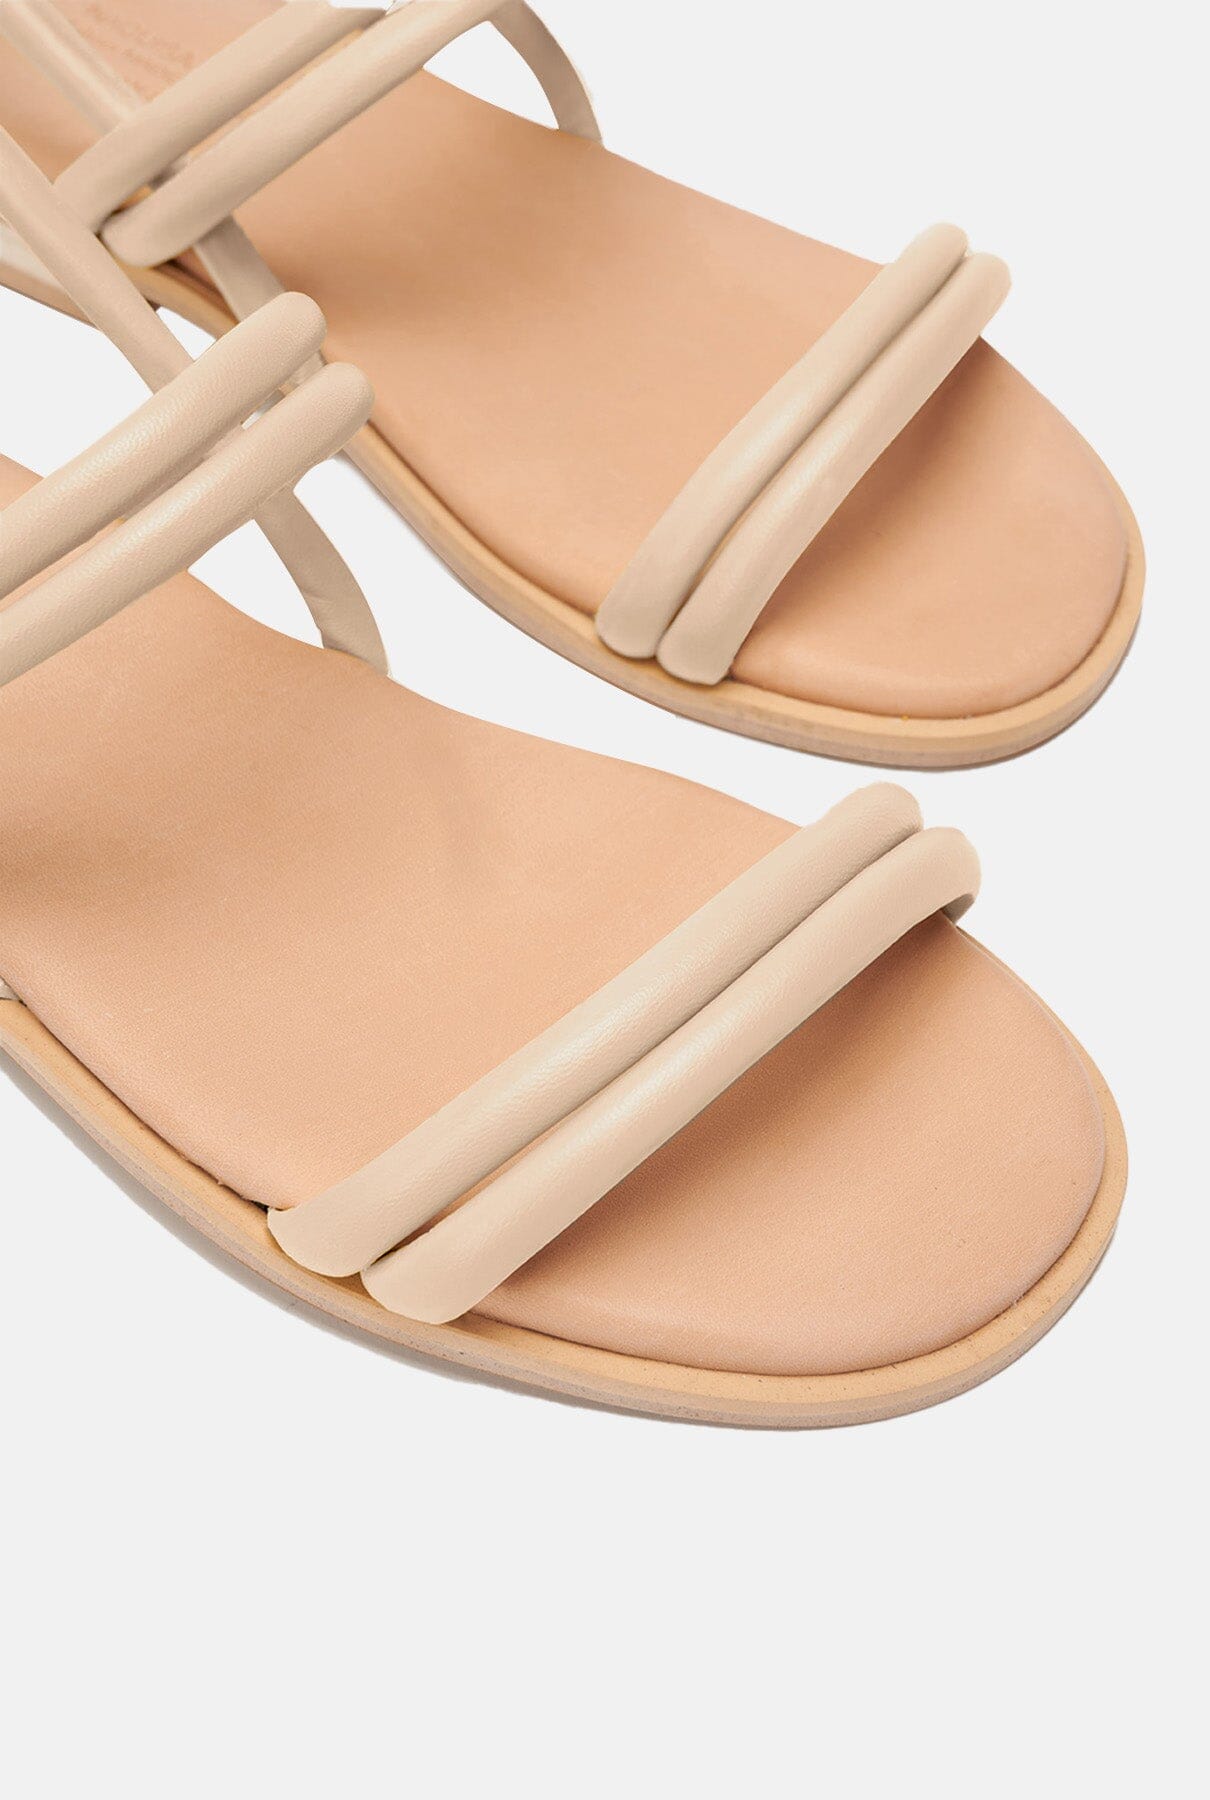 ILSE BEIGE Flat sandals Naguisa 